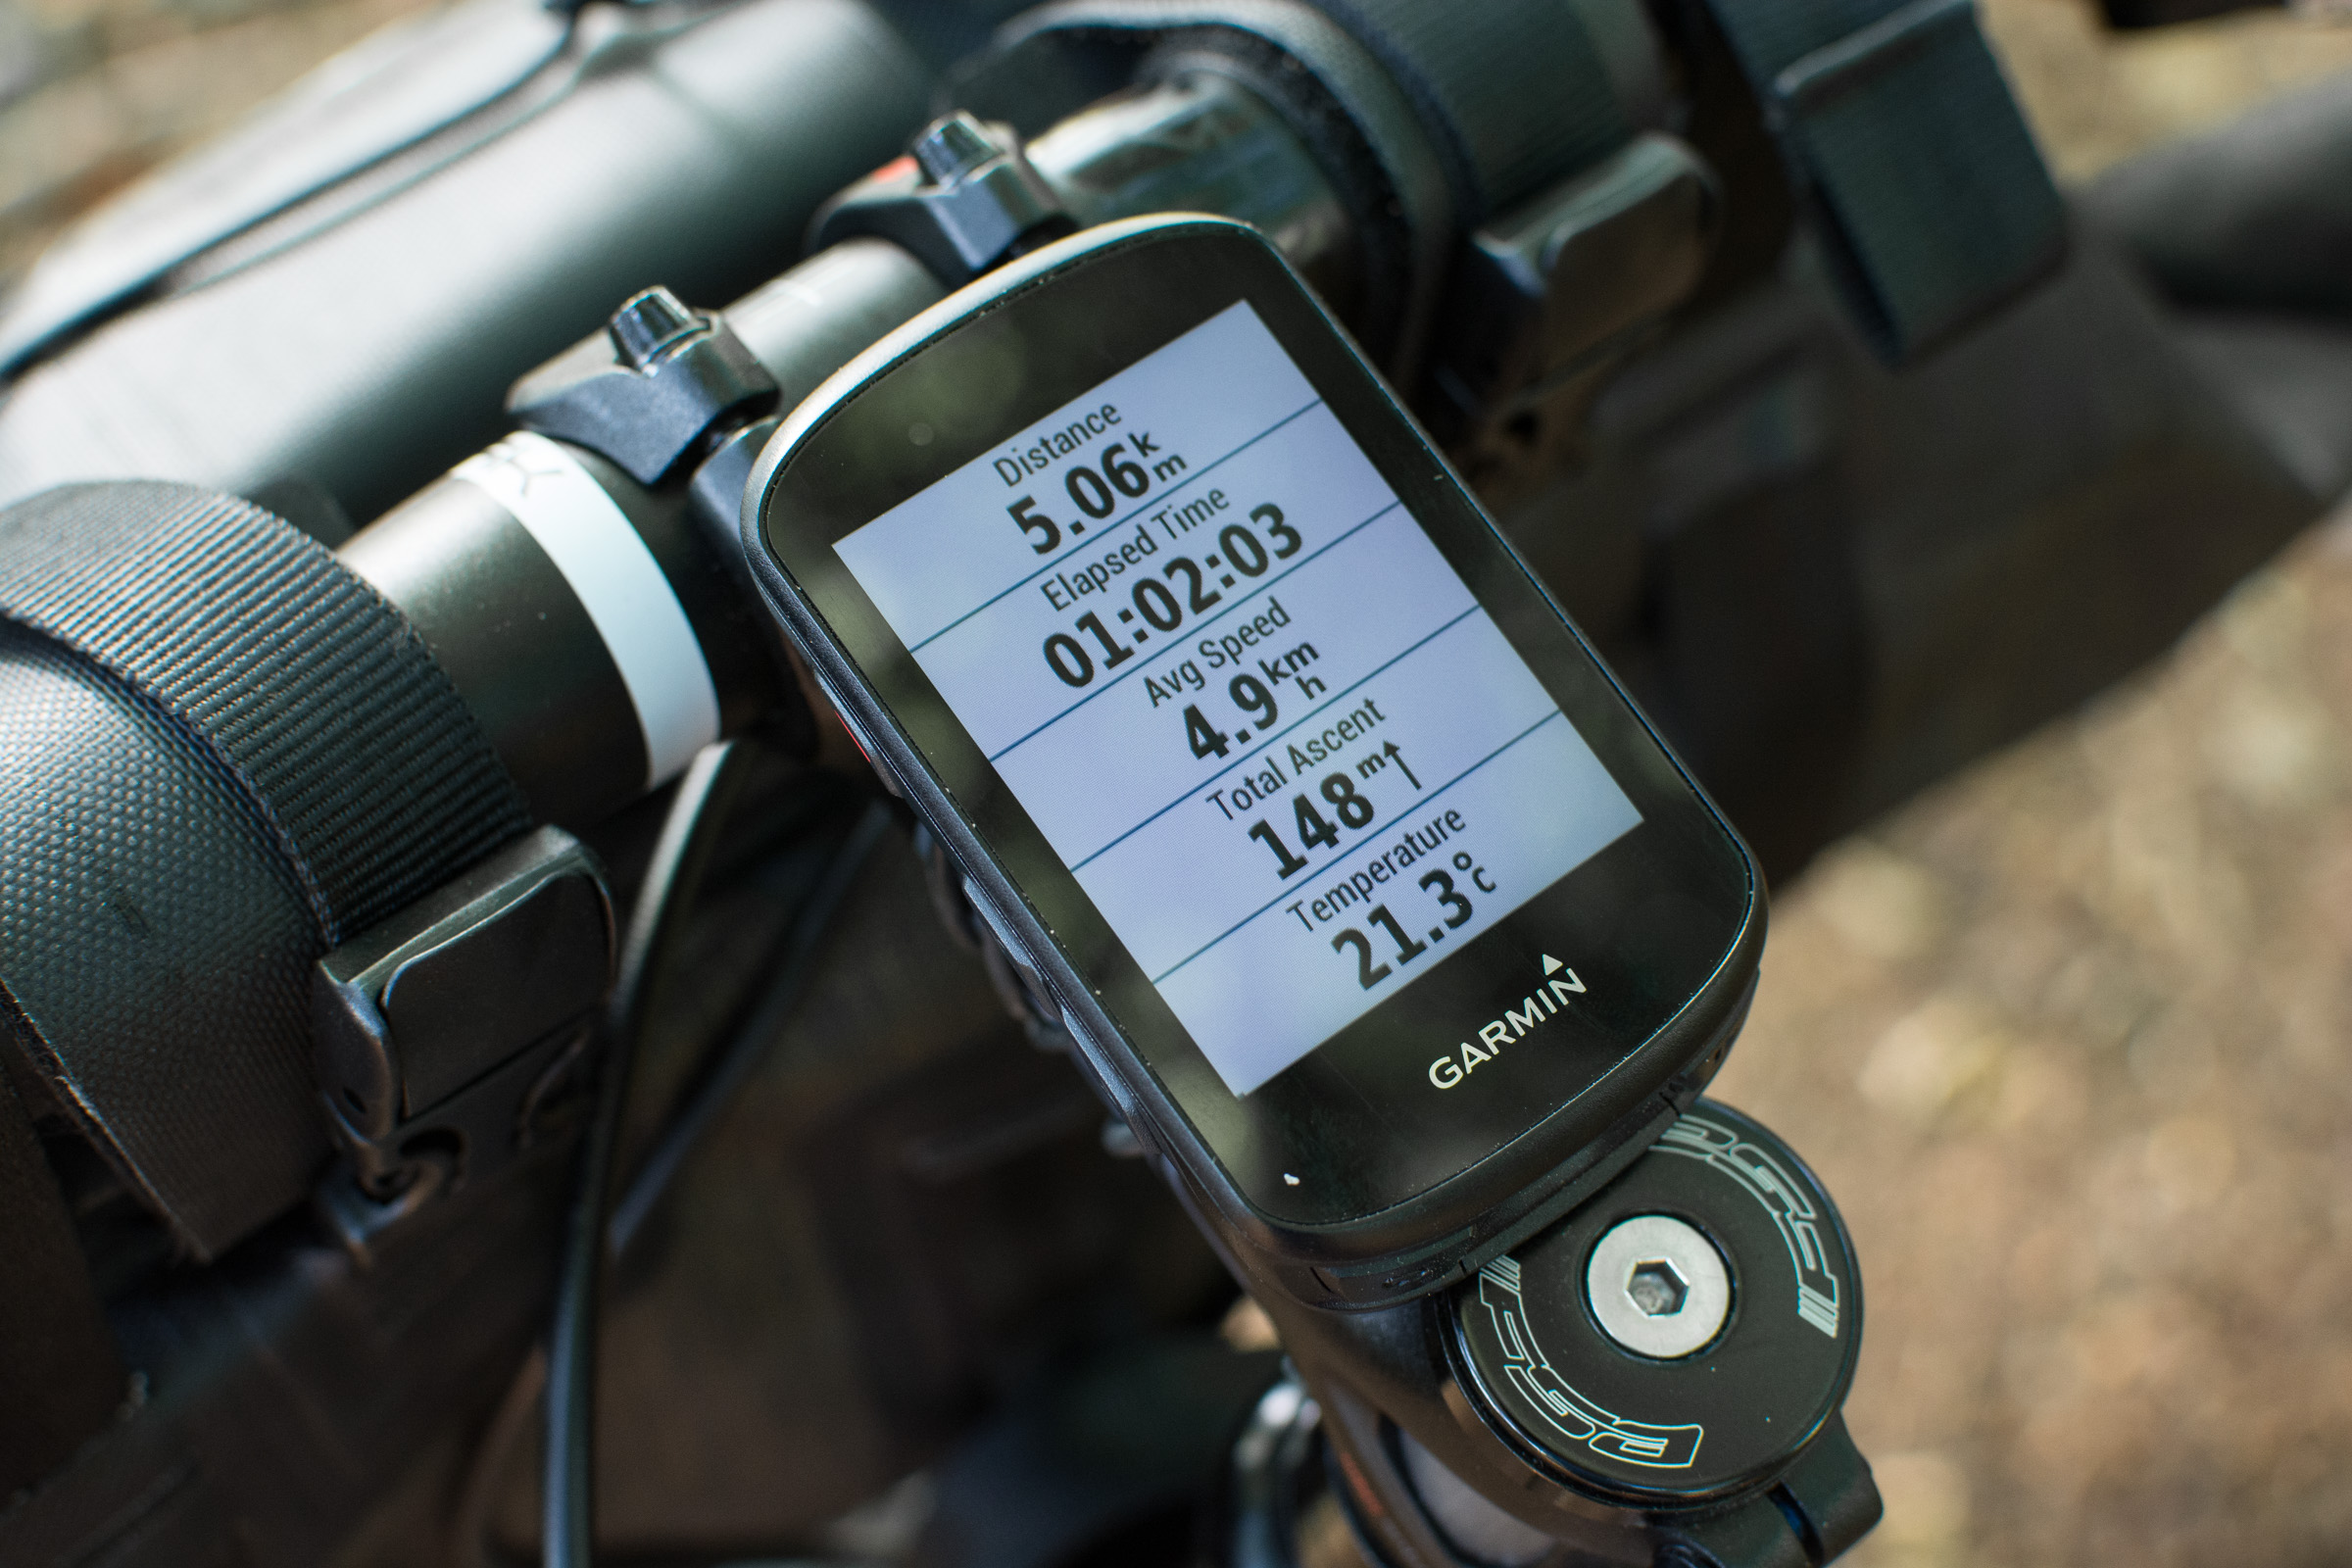 Garmin Edge 530 GPS computer review - BikeRadar